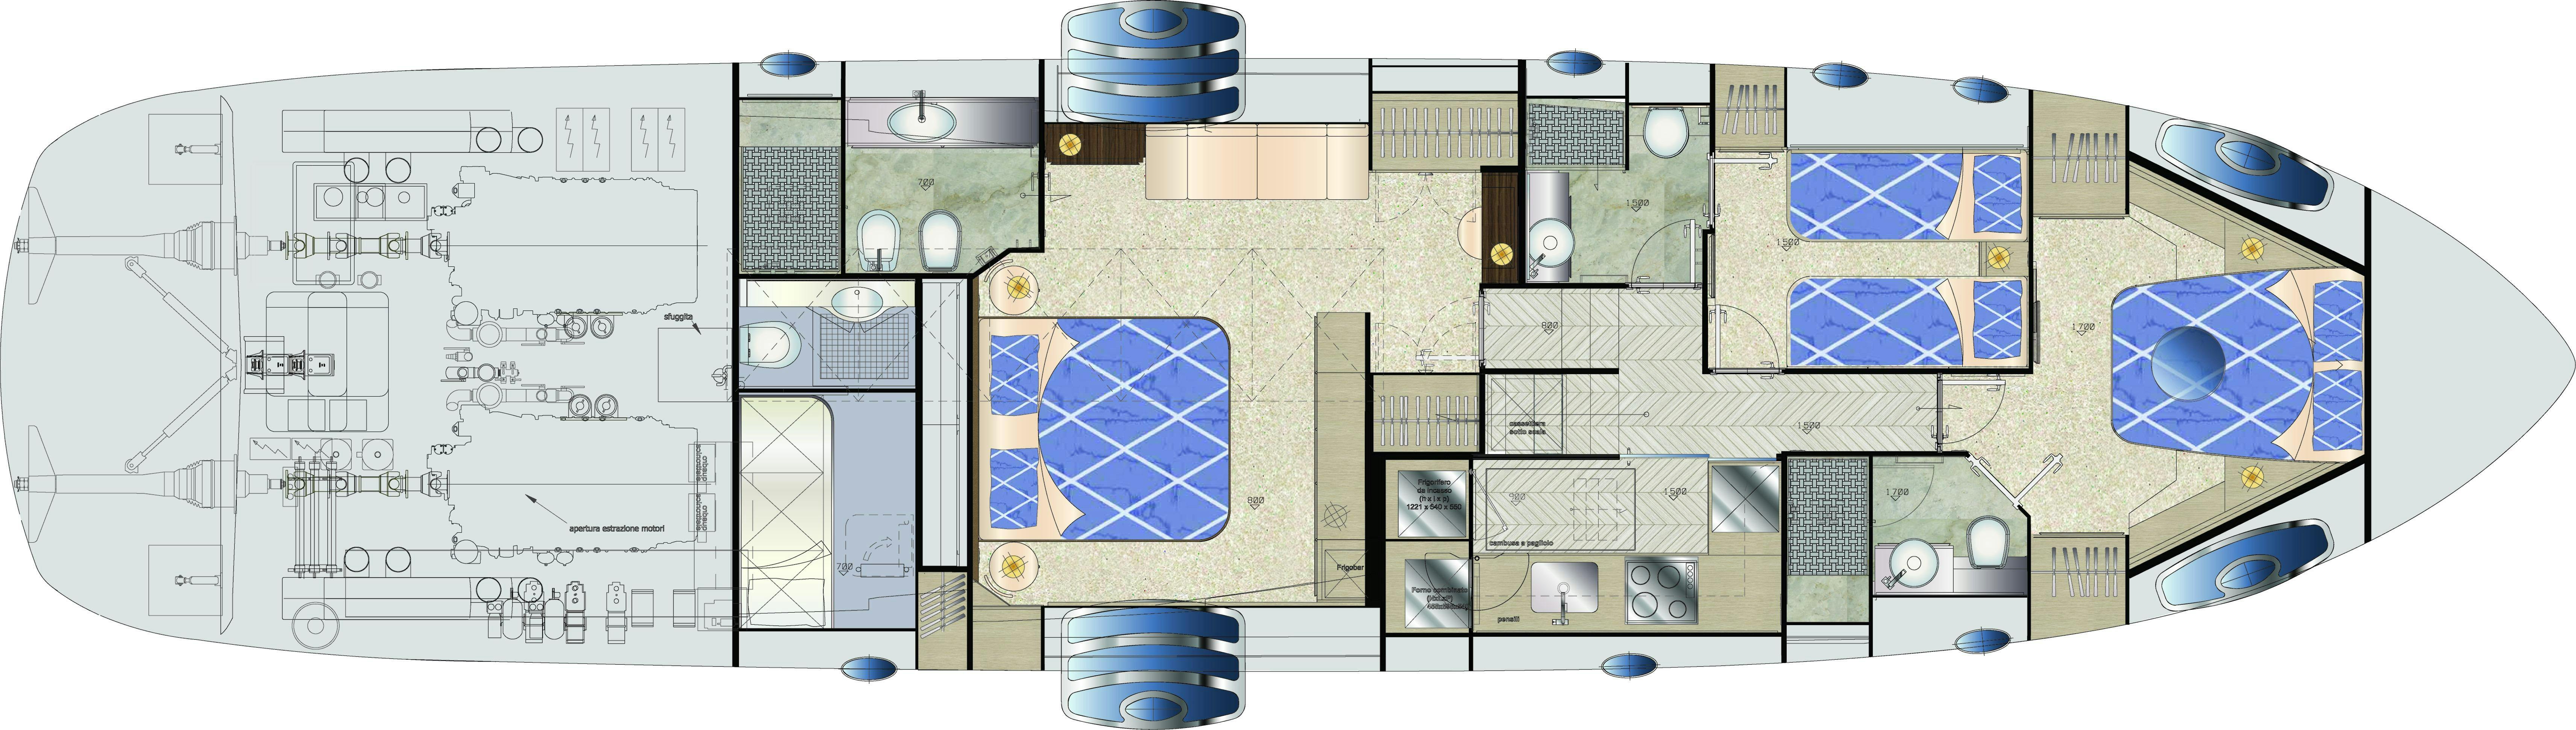 Manufacturer Provided Image: Pershing 70 Lower Deck Layout Plan